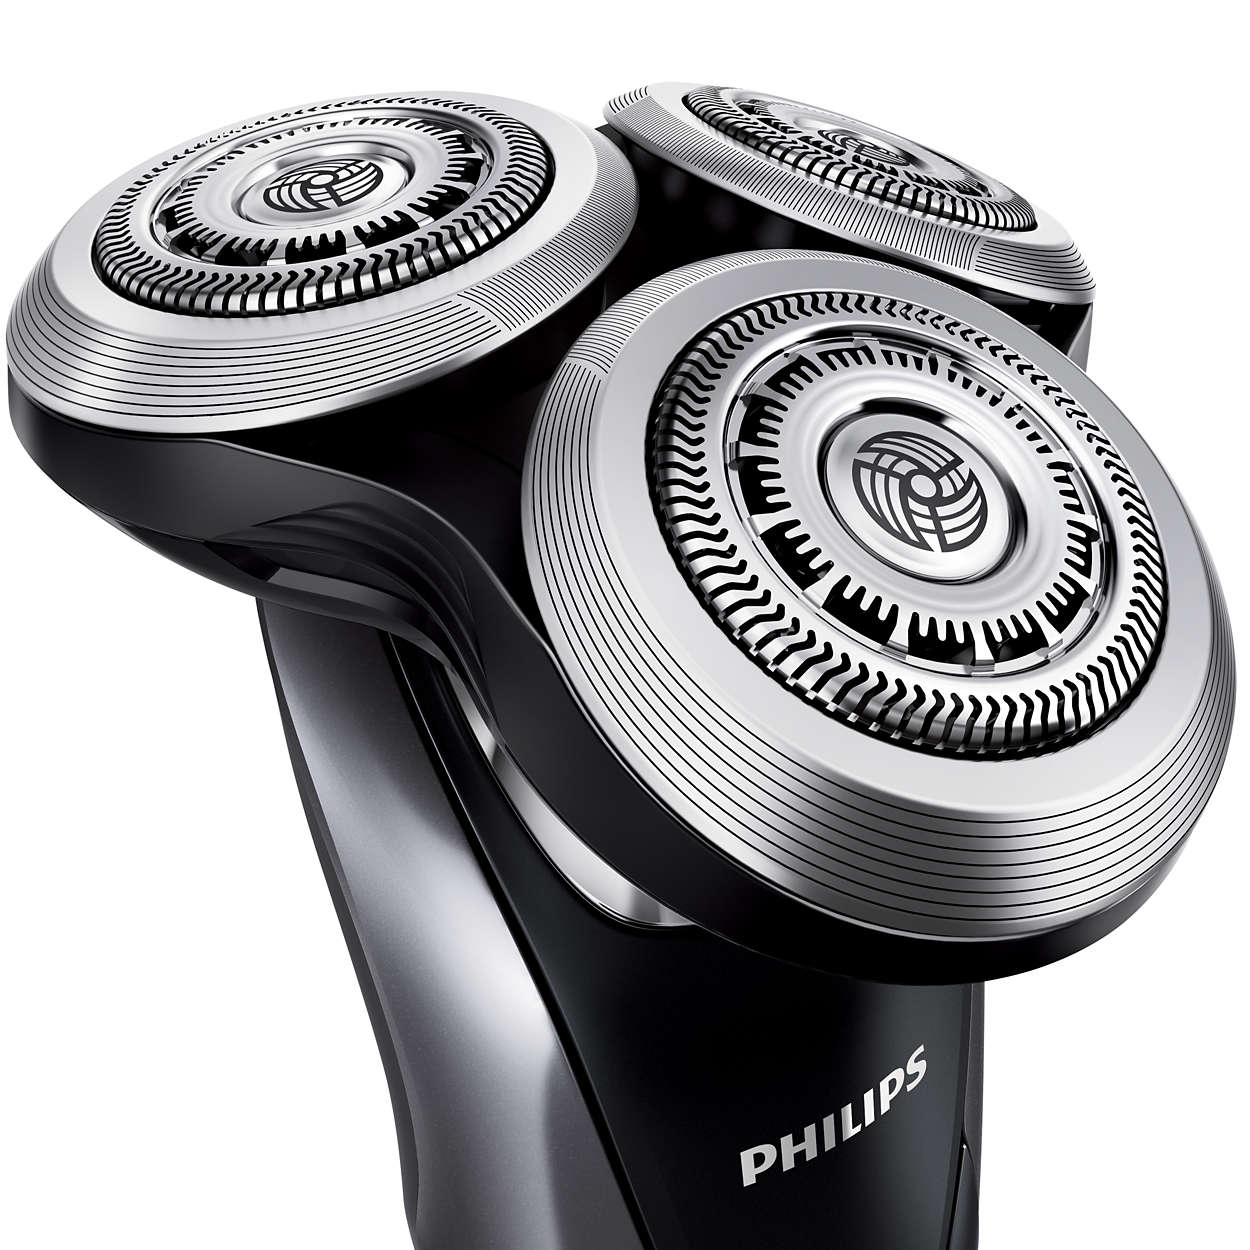 Shaver series 9000 替刃 SH90/51 SH90/51 | Philips